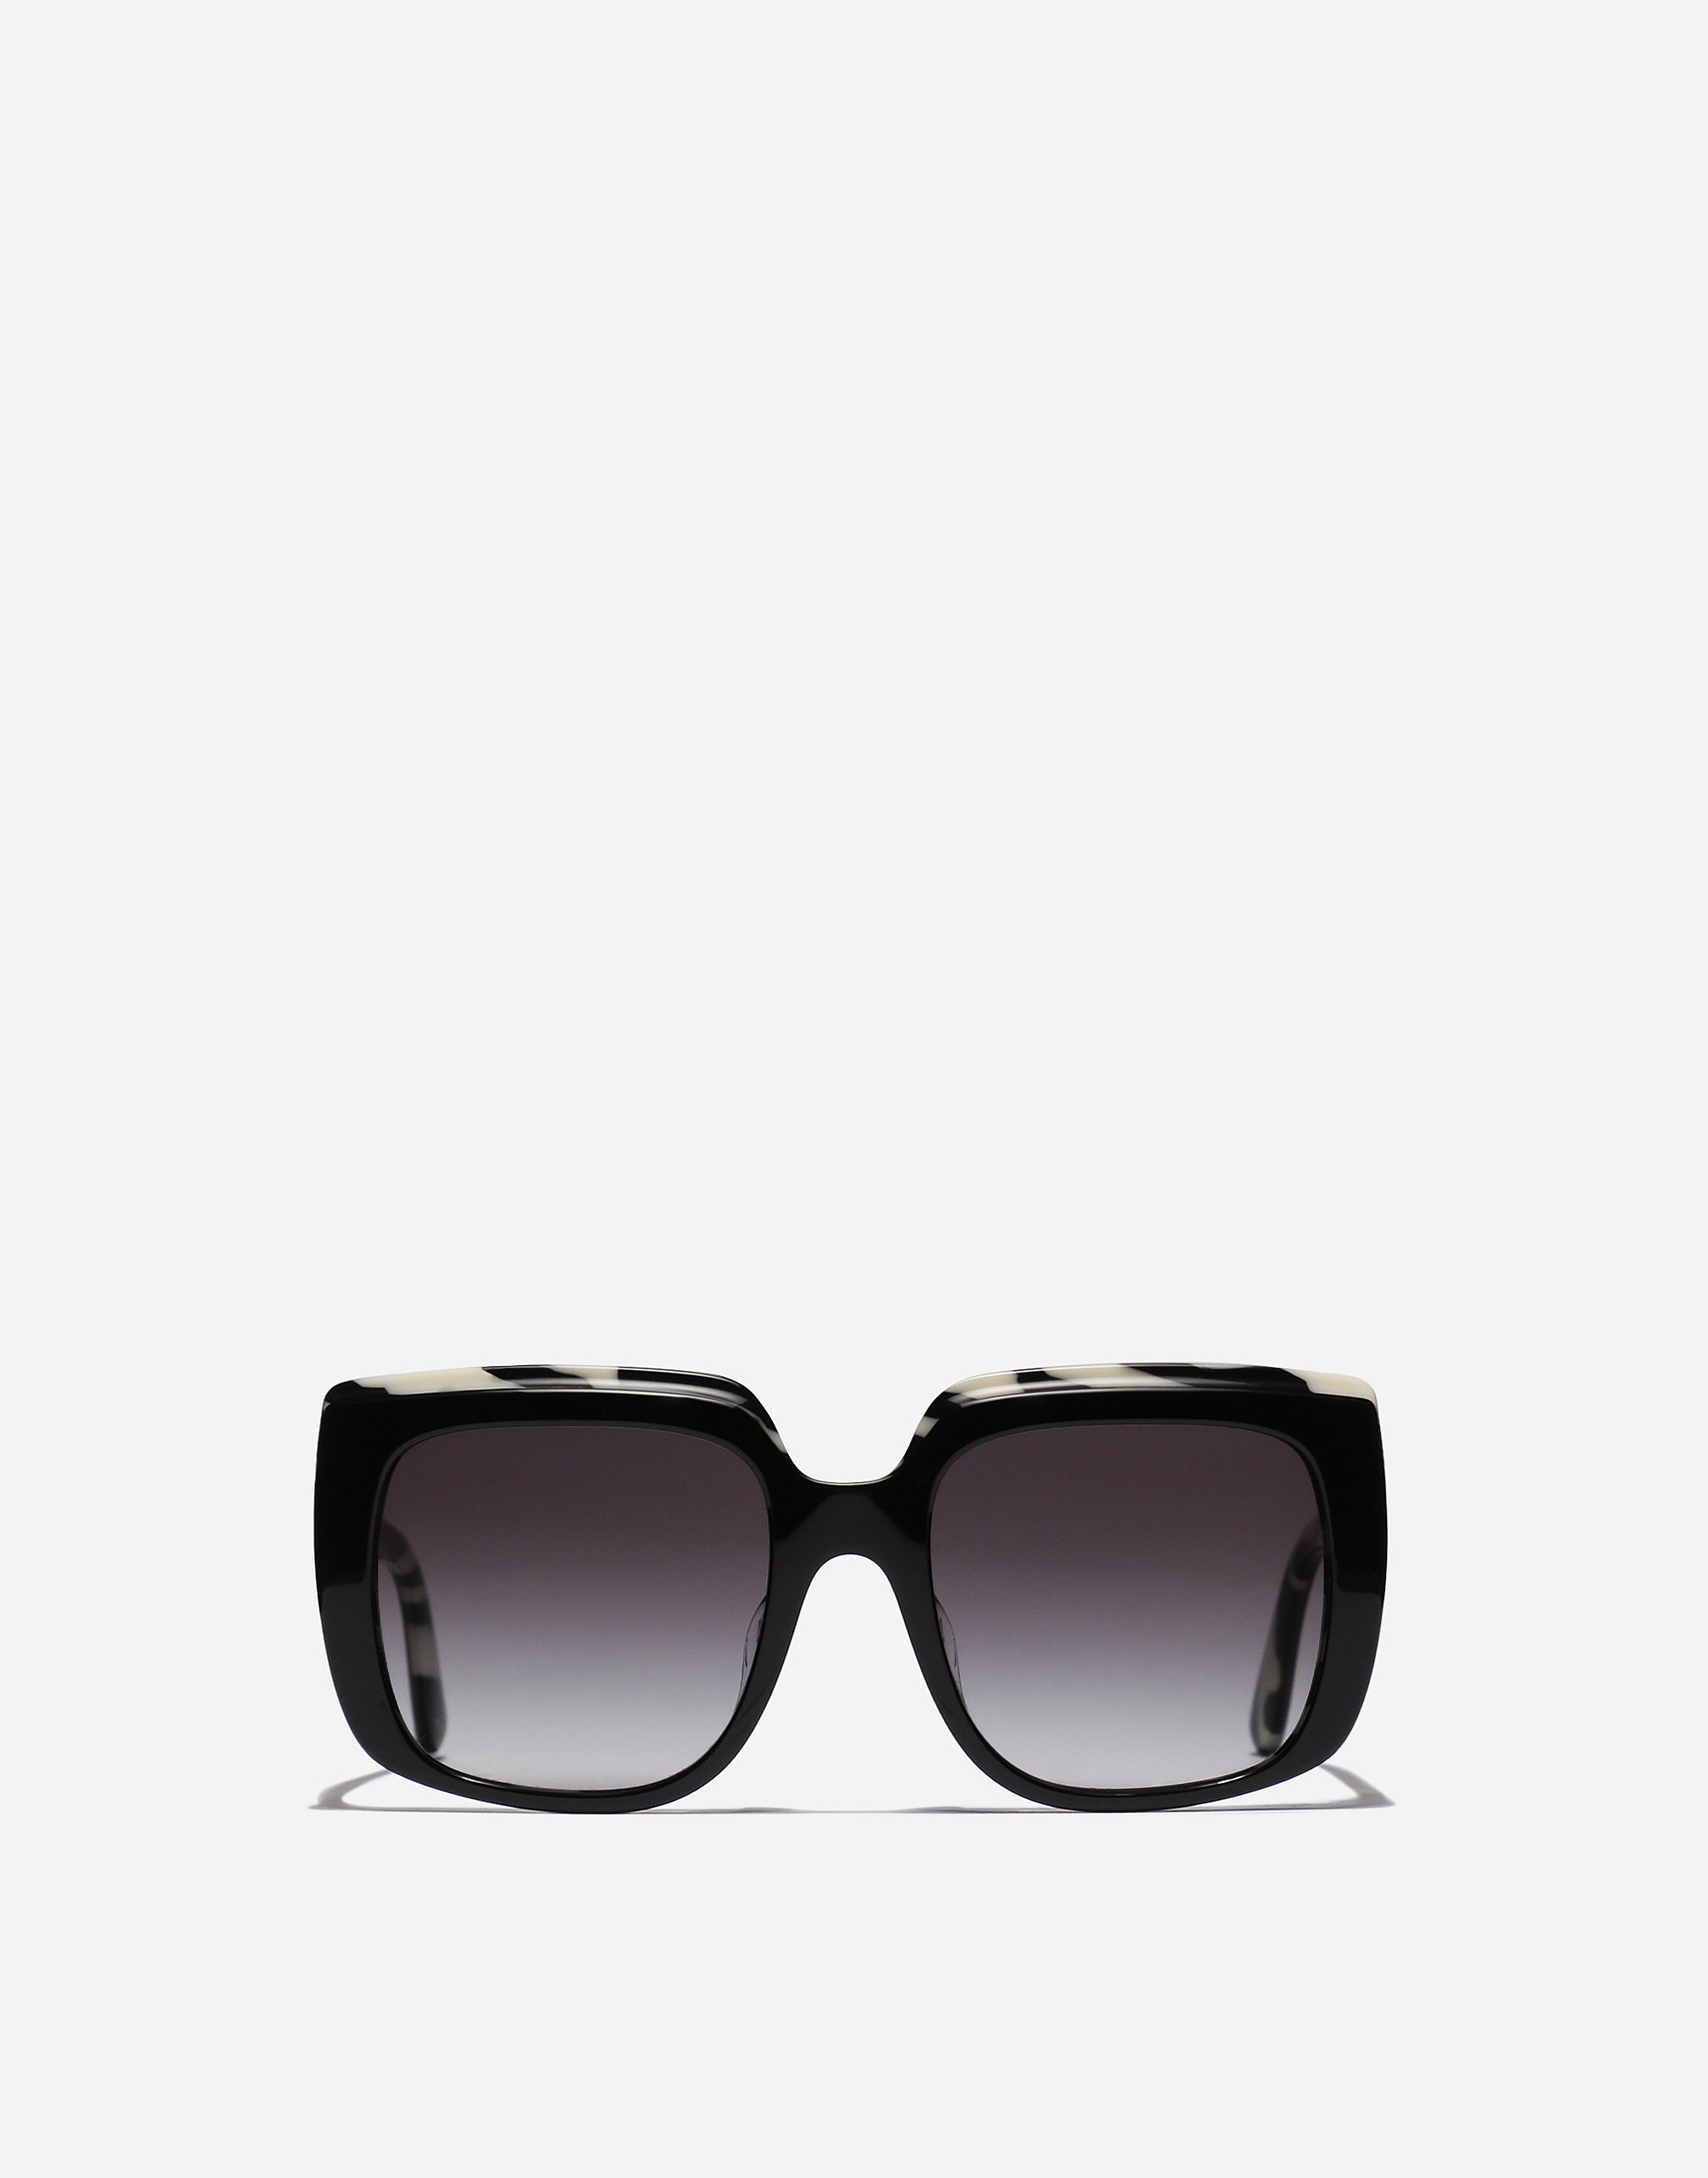 Dolce & Gabbana New Print Sunglasses In Black On Zebra